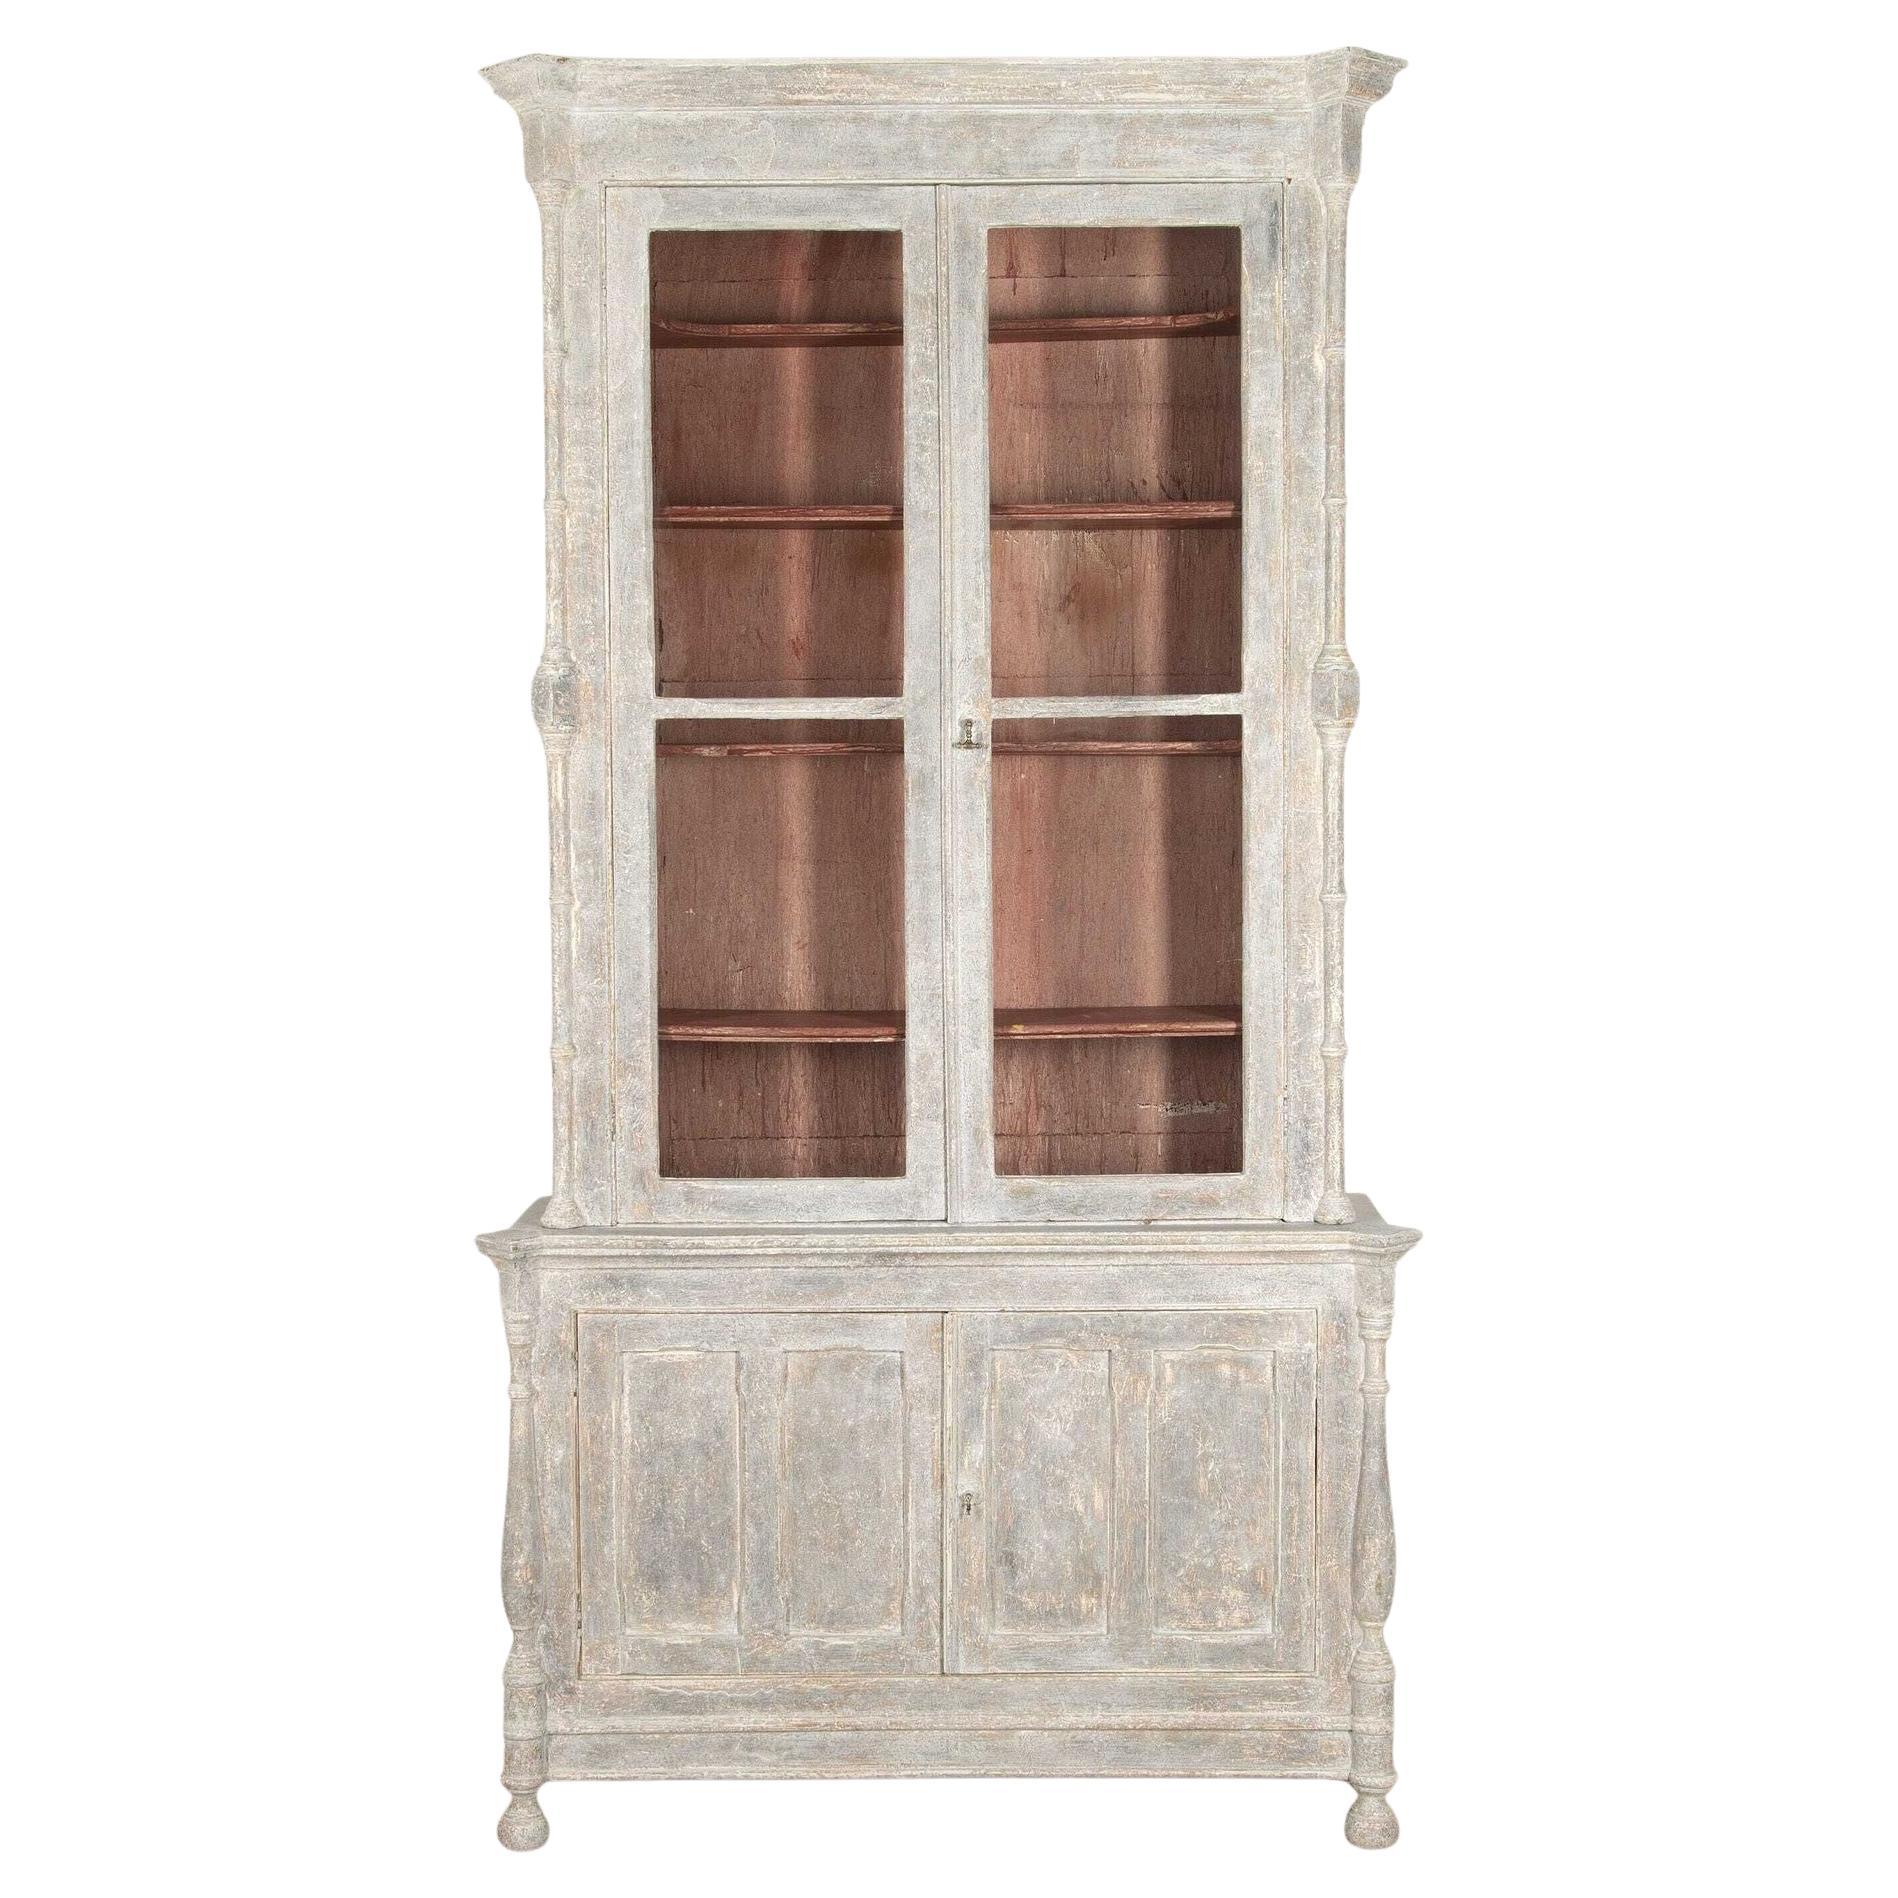 French 19th Century Glazed Bookcase